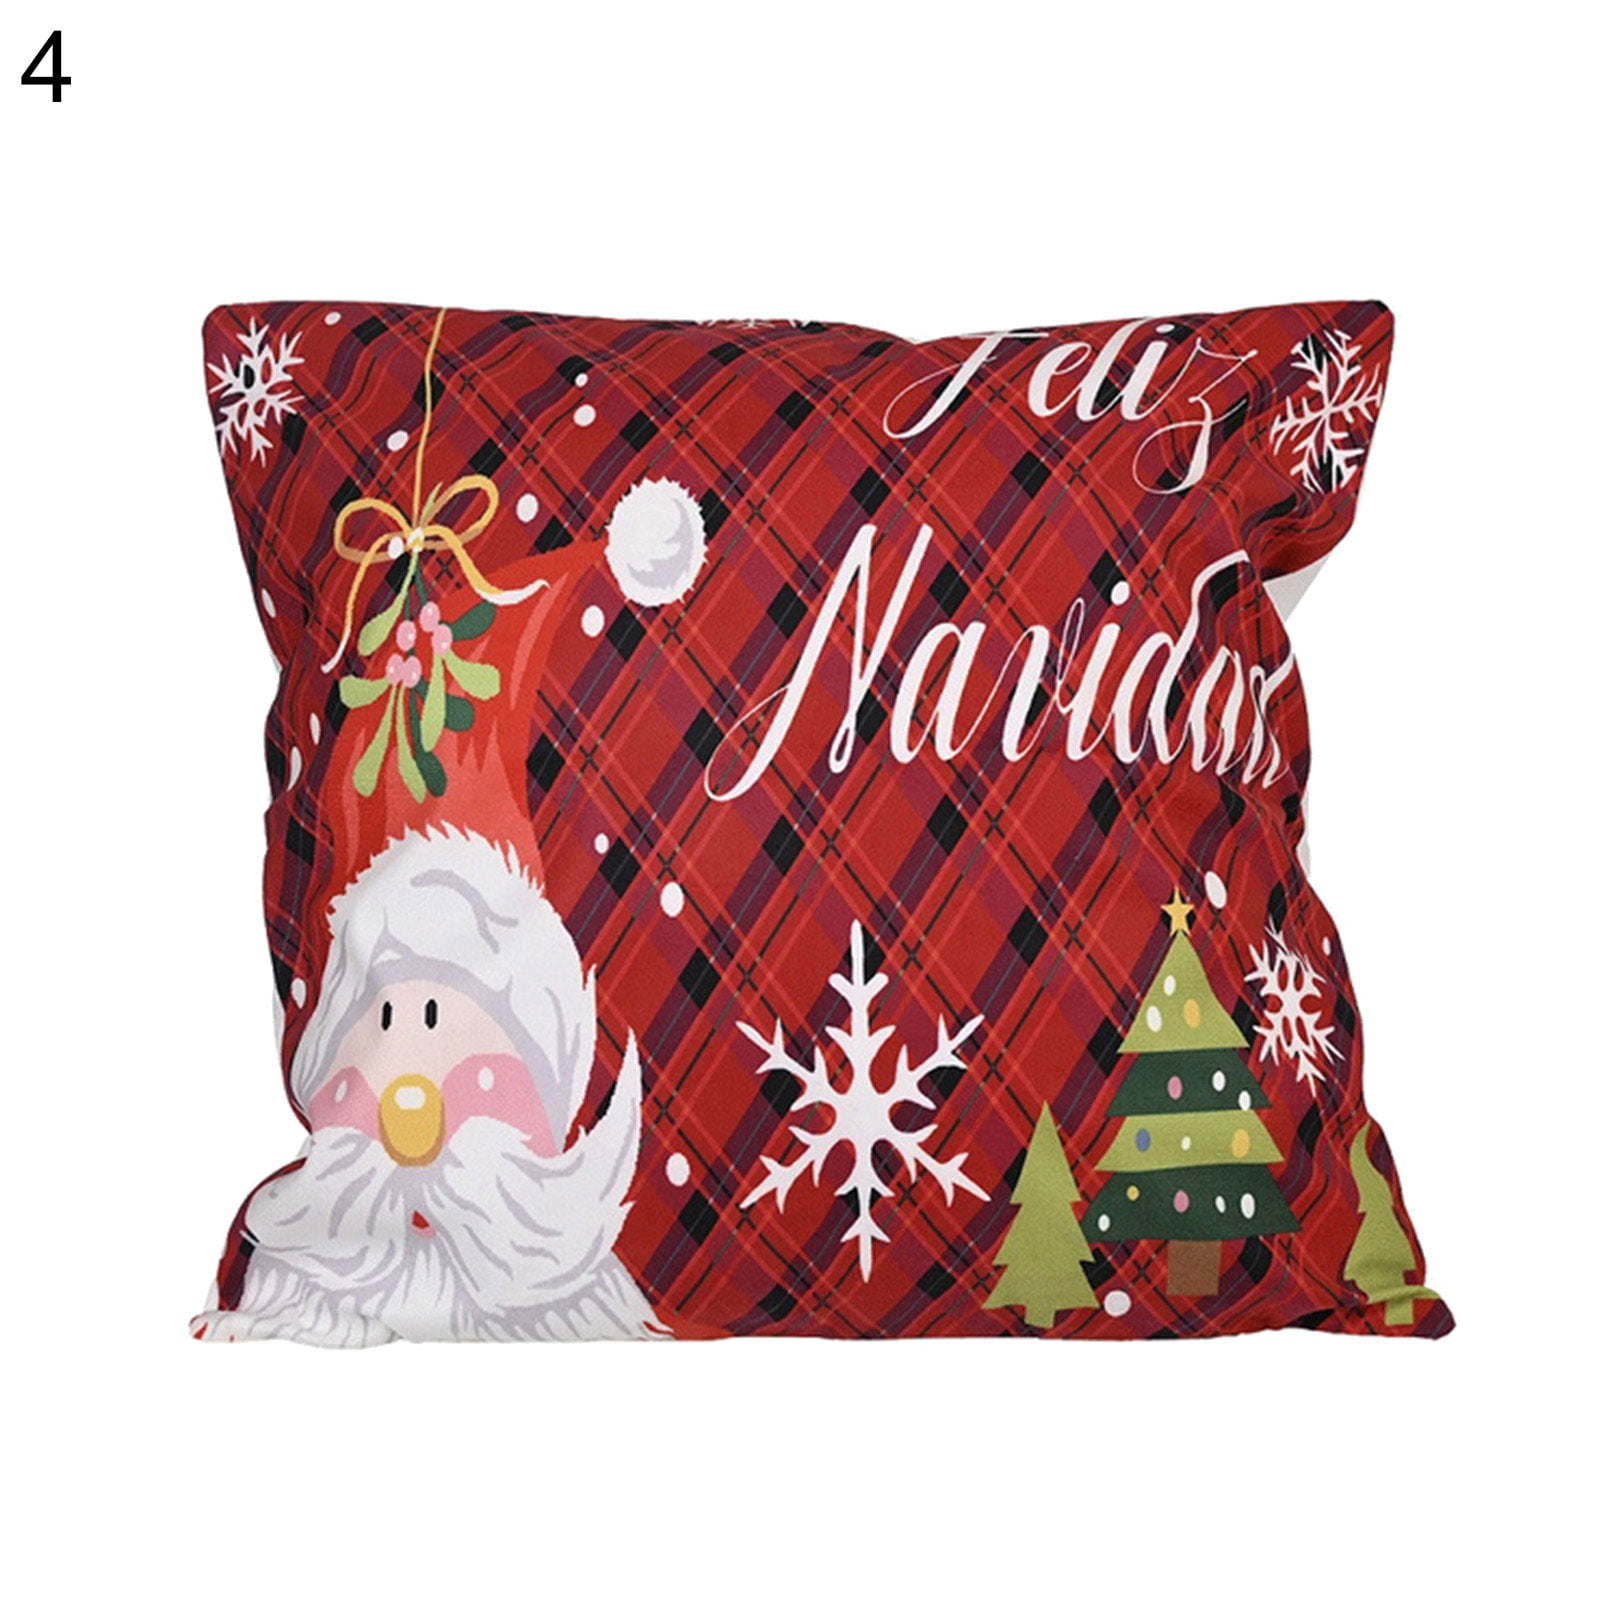 Xmas Cushion Cover Merry Christmas Santa Claus Socks Pillows Case Home Decor US 